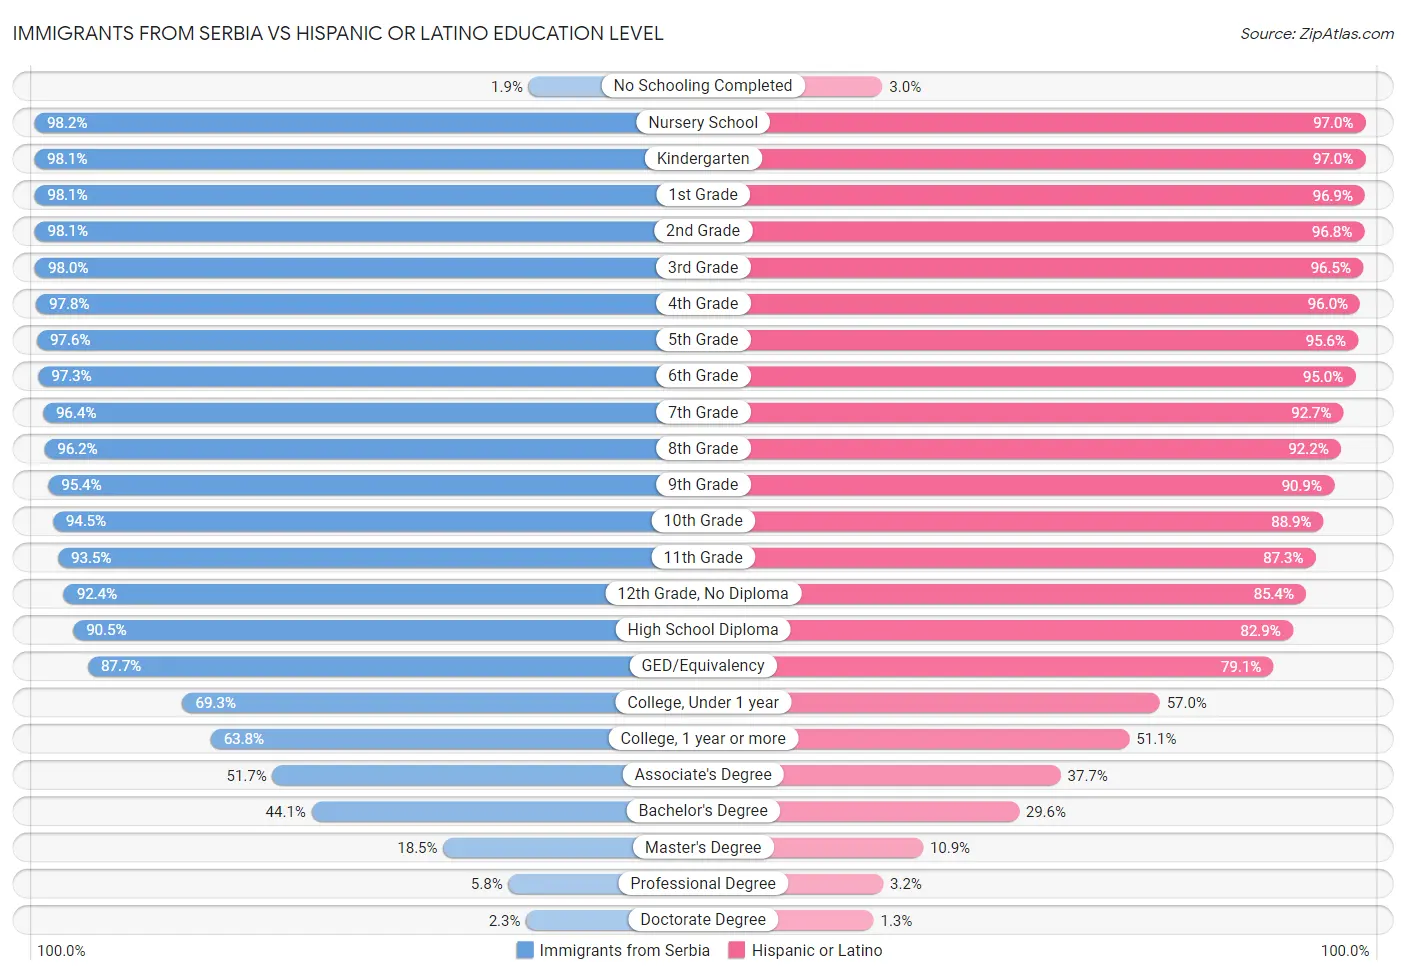 Immigrants from Serbia vs Hispanic or Latino Education Level